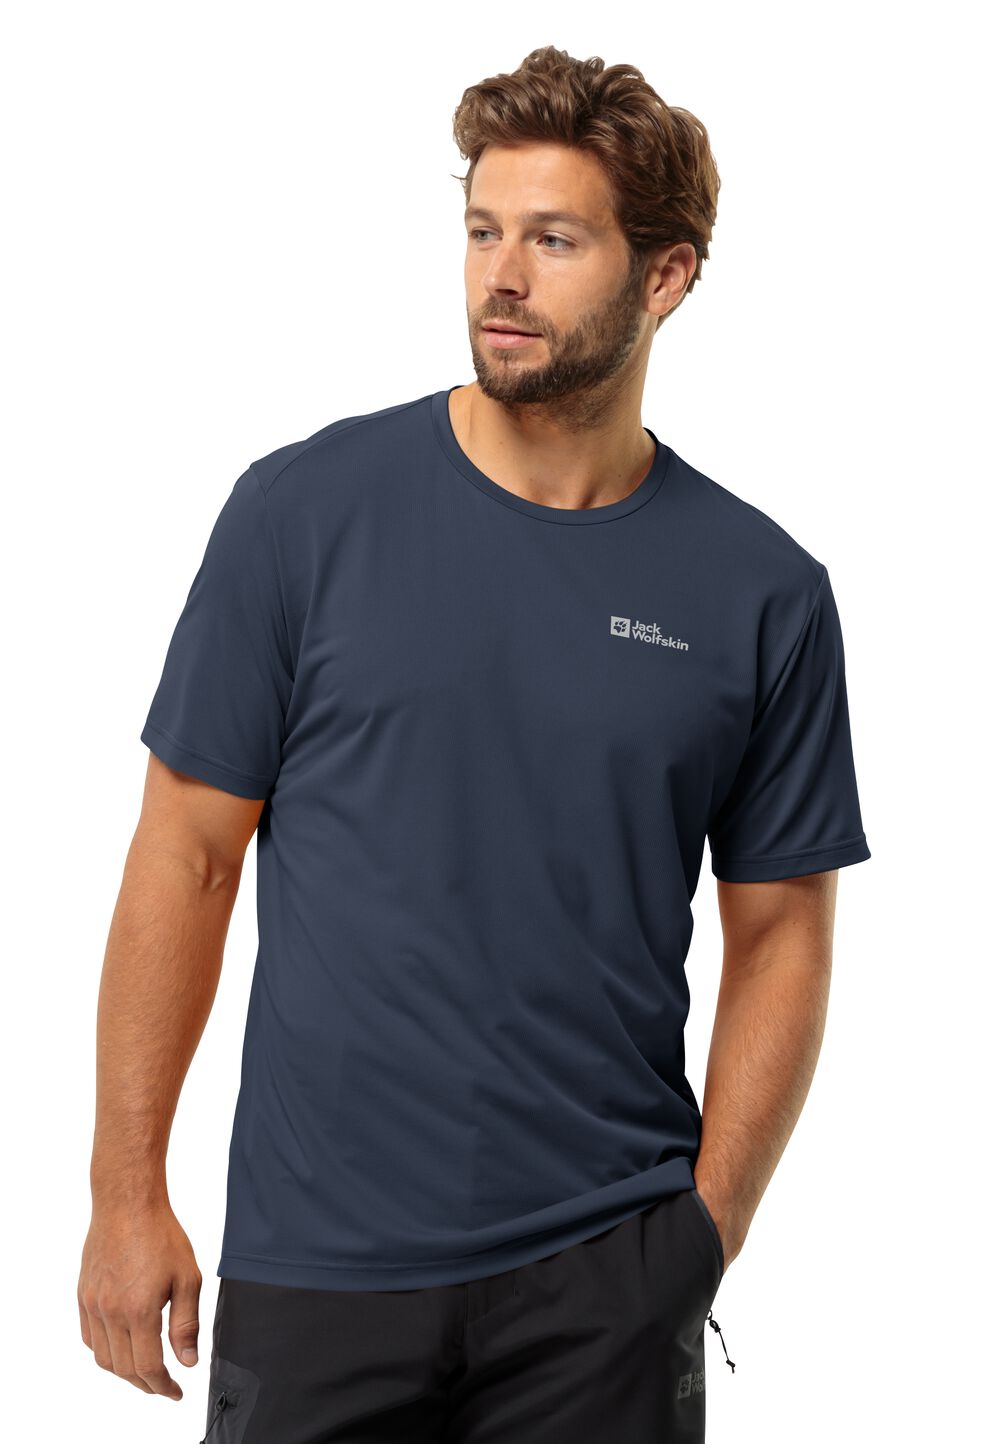 Jack Wolfskin Delgami S S Men Functioneel shirt Heren XL blue night blue